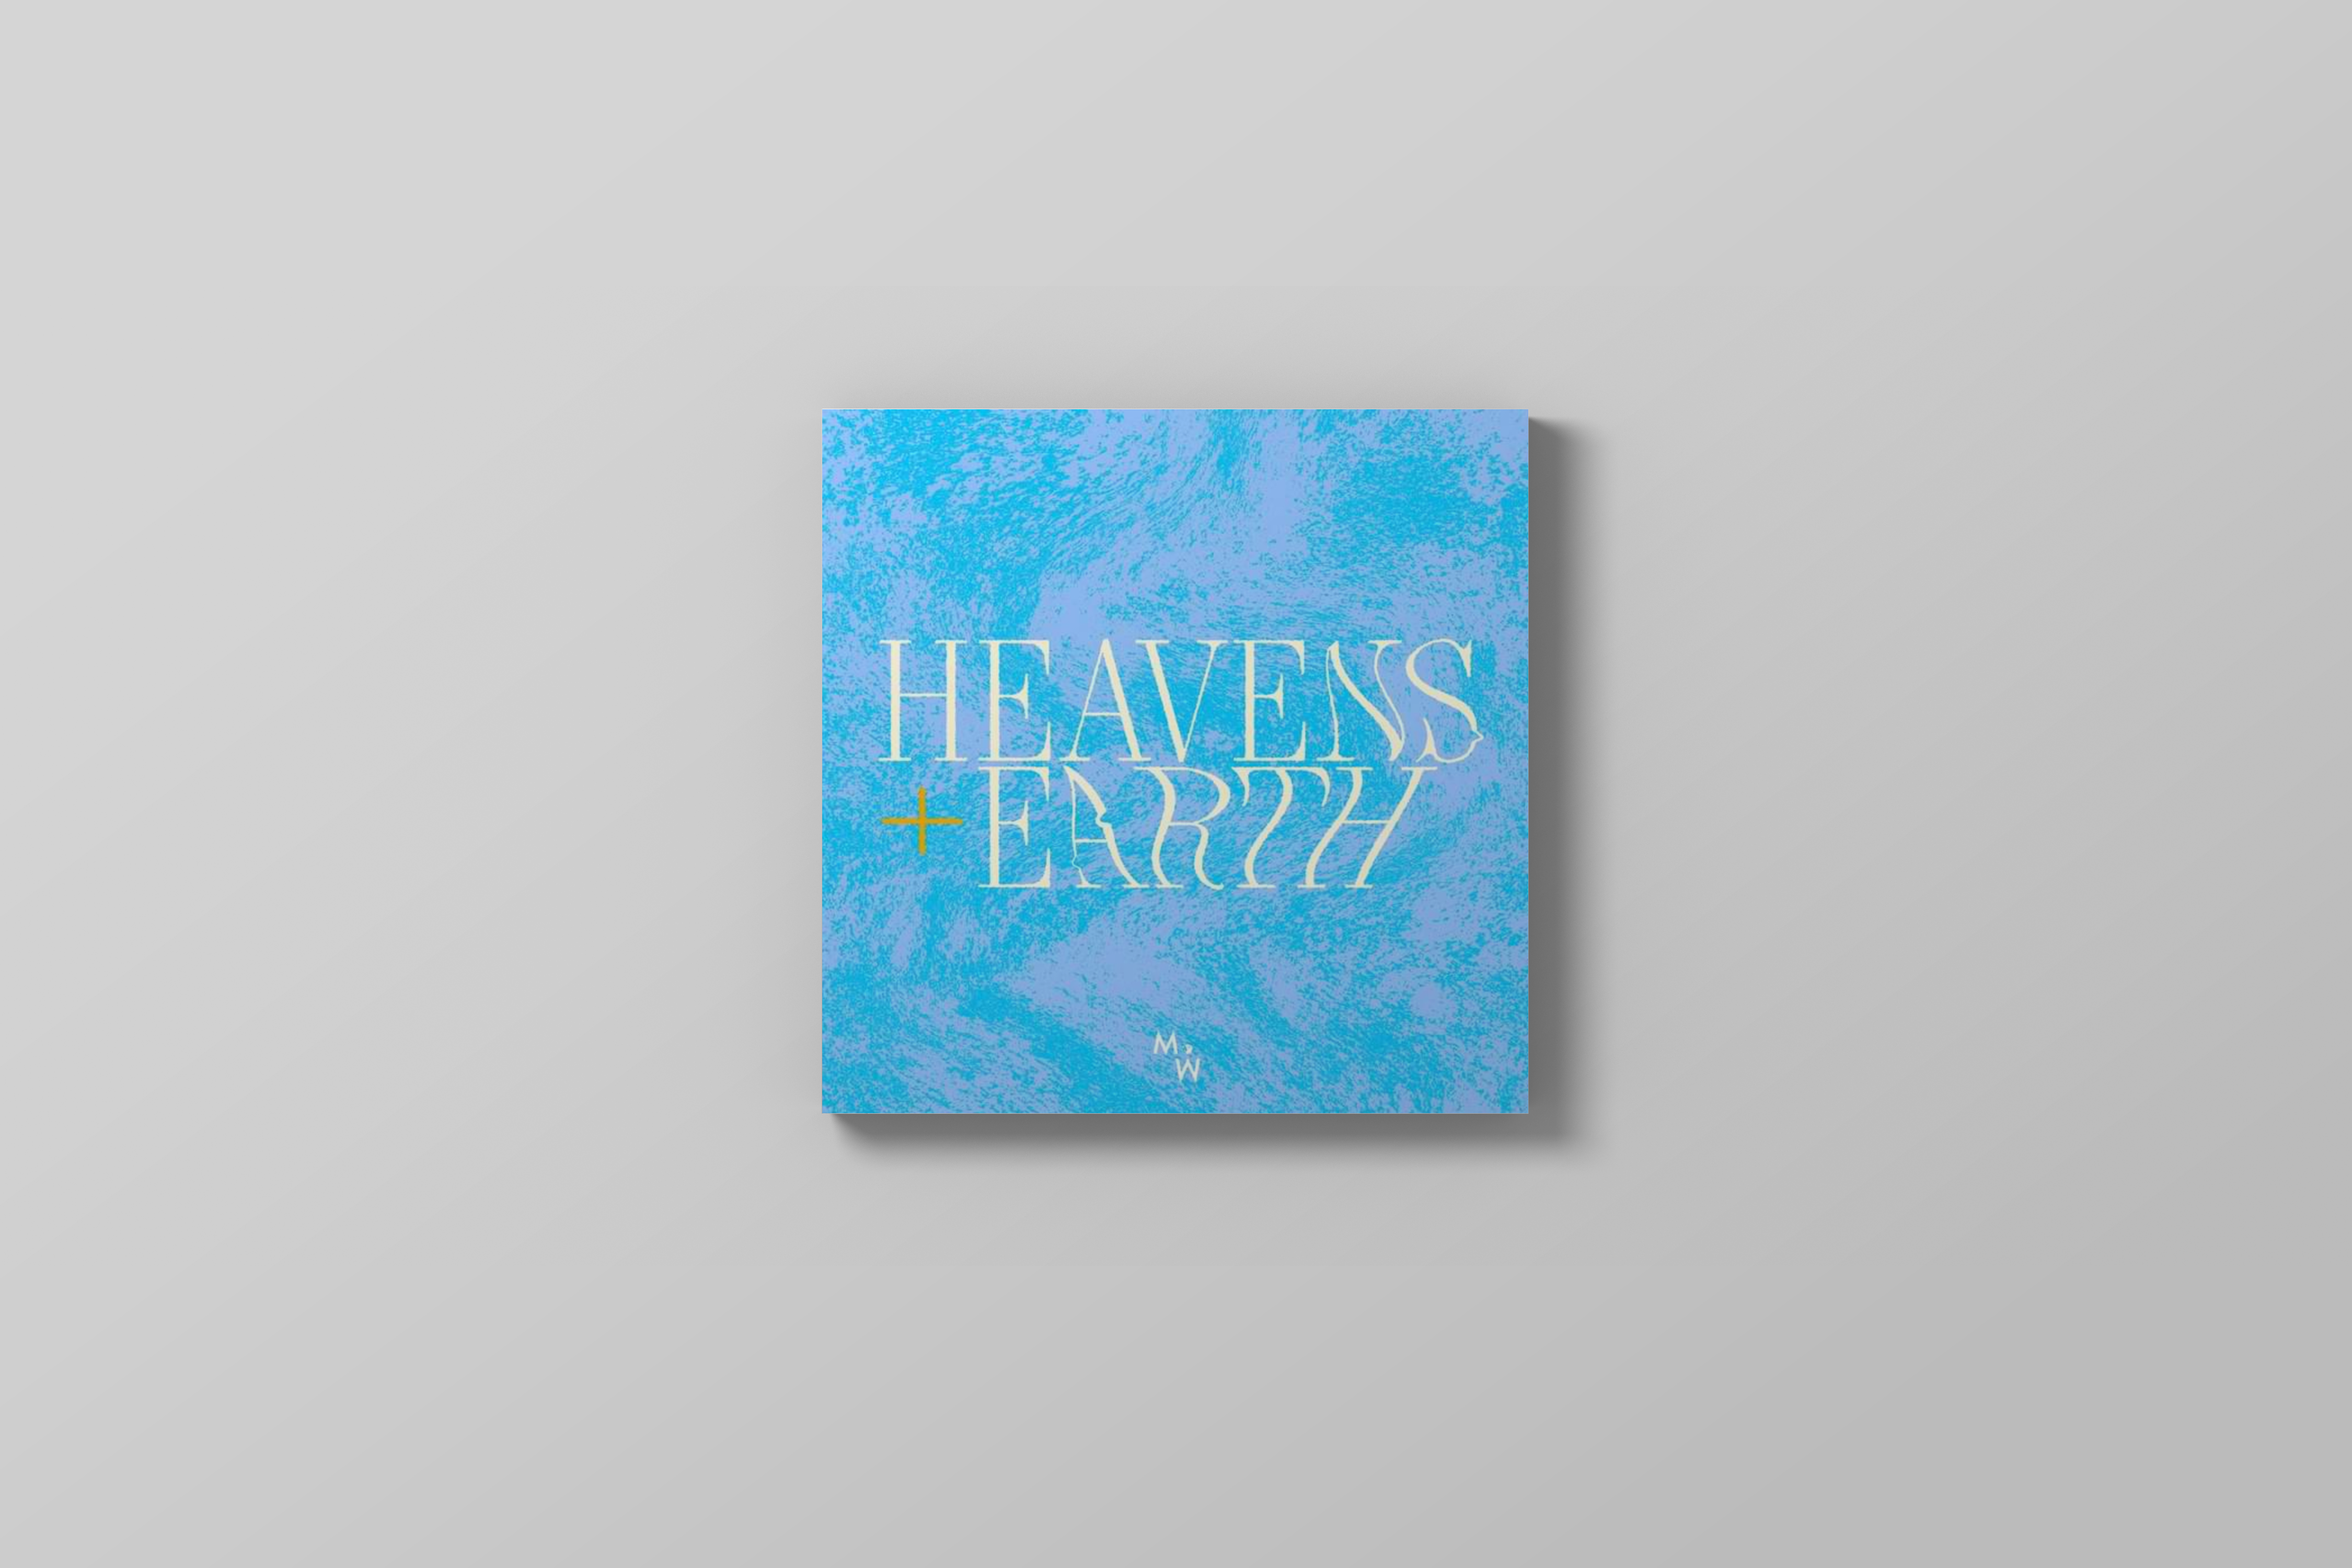 Heavens + Earth - MP3 (Full Album)